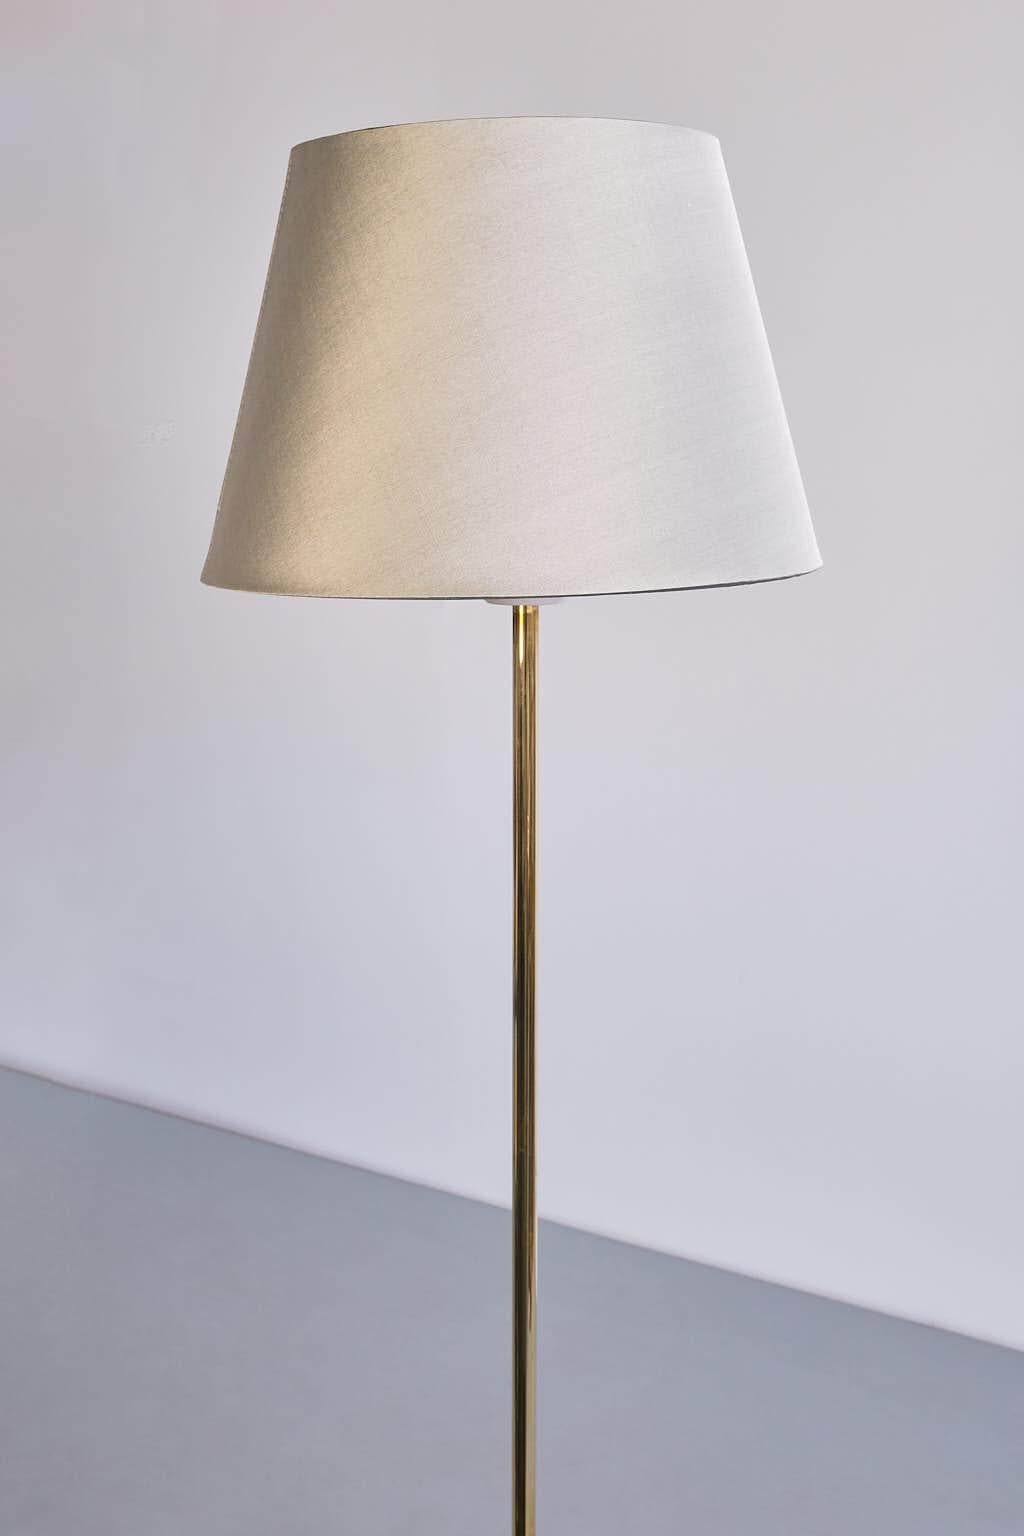 Scandinavian Modern Falkenbergs Belysning Floor Lamp in Glass and Brass, Sweden, 1960s For Sale